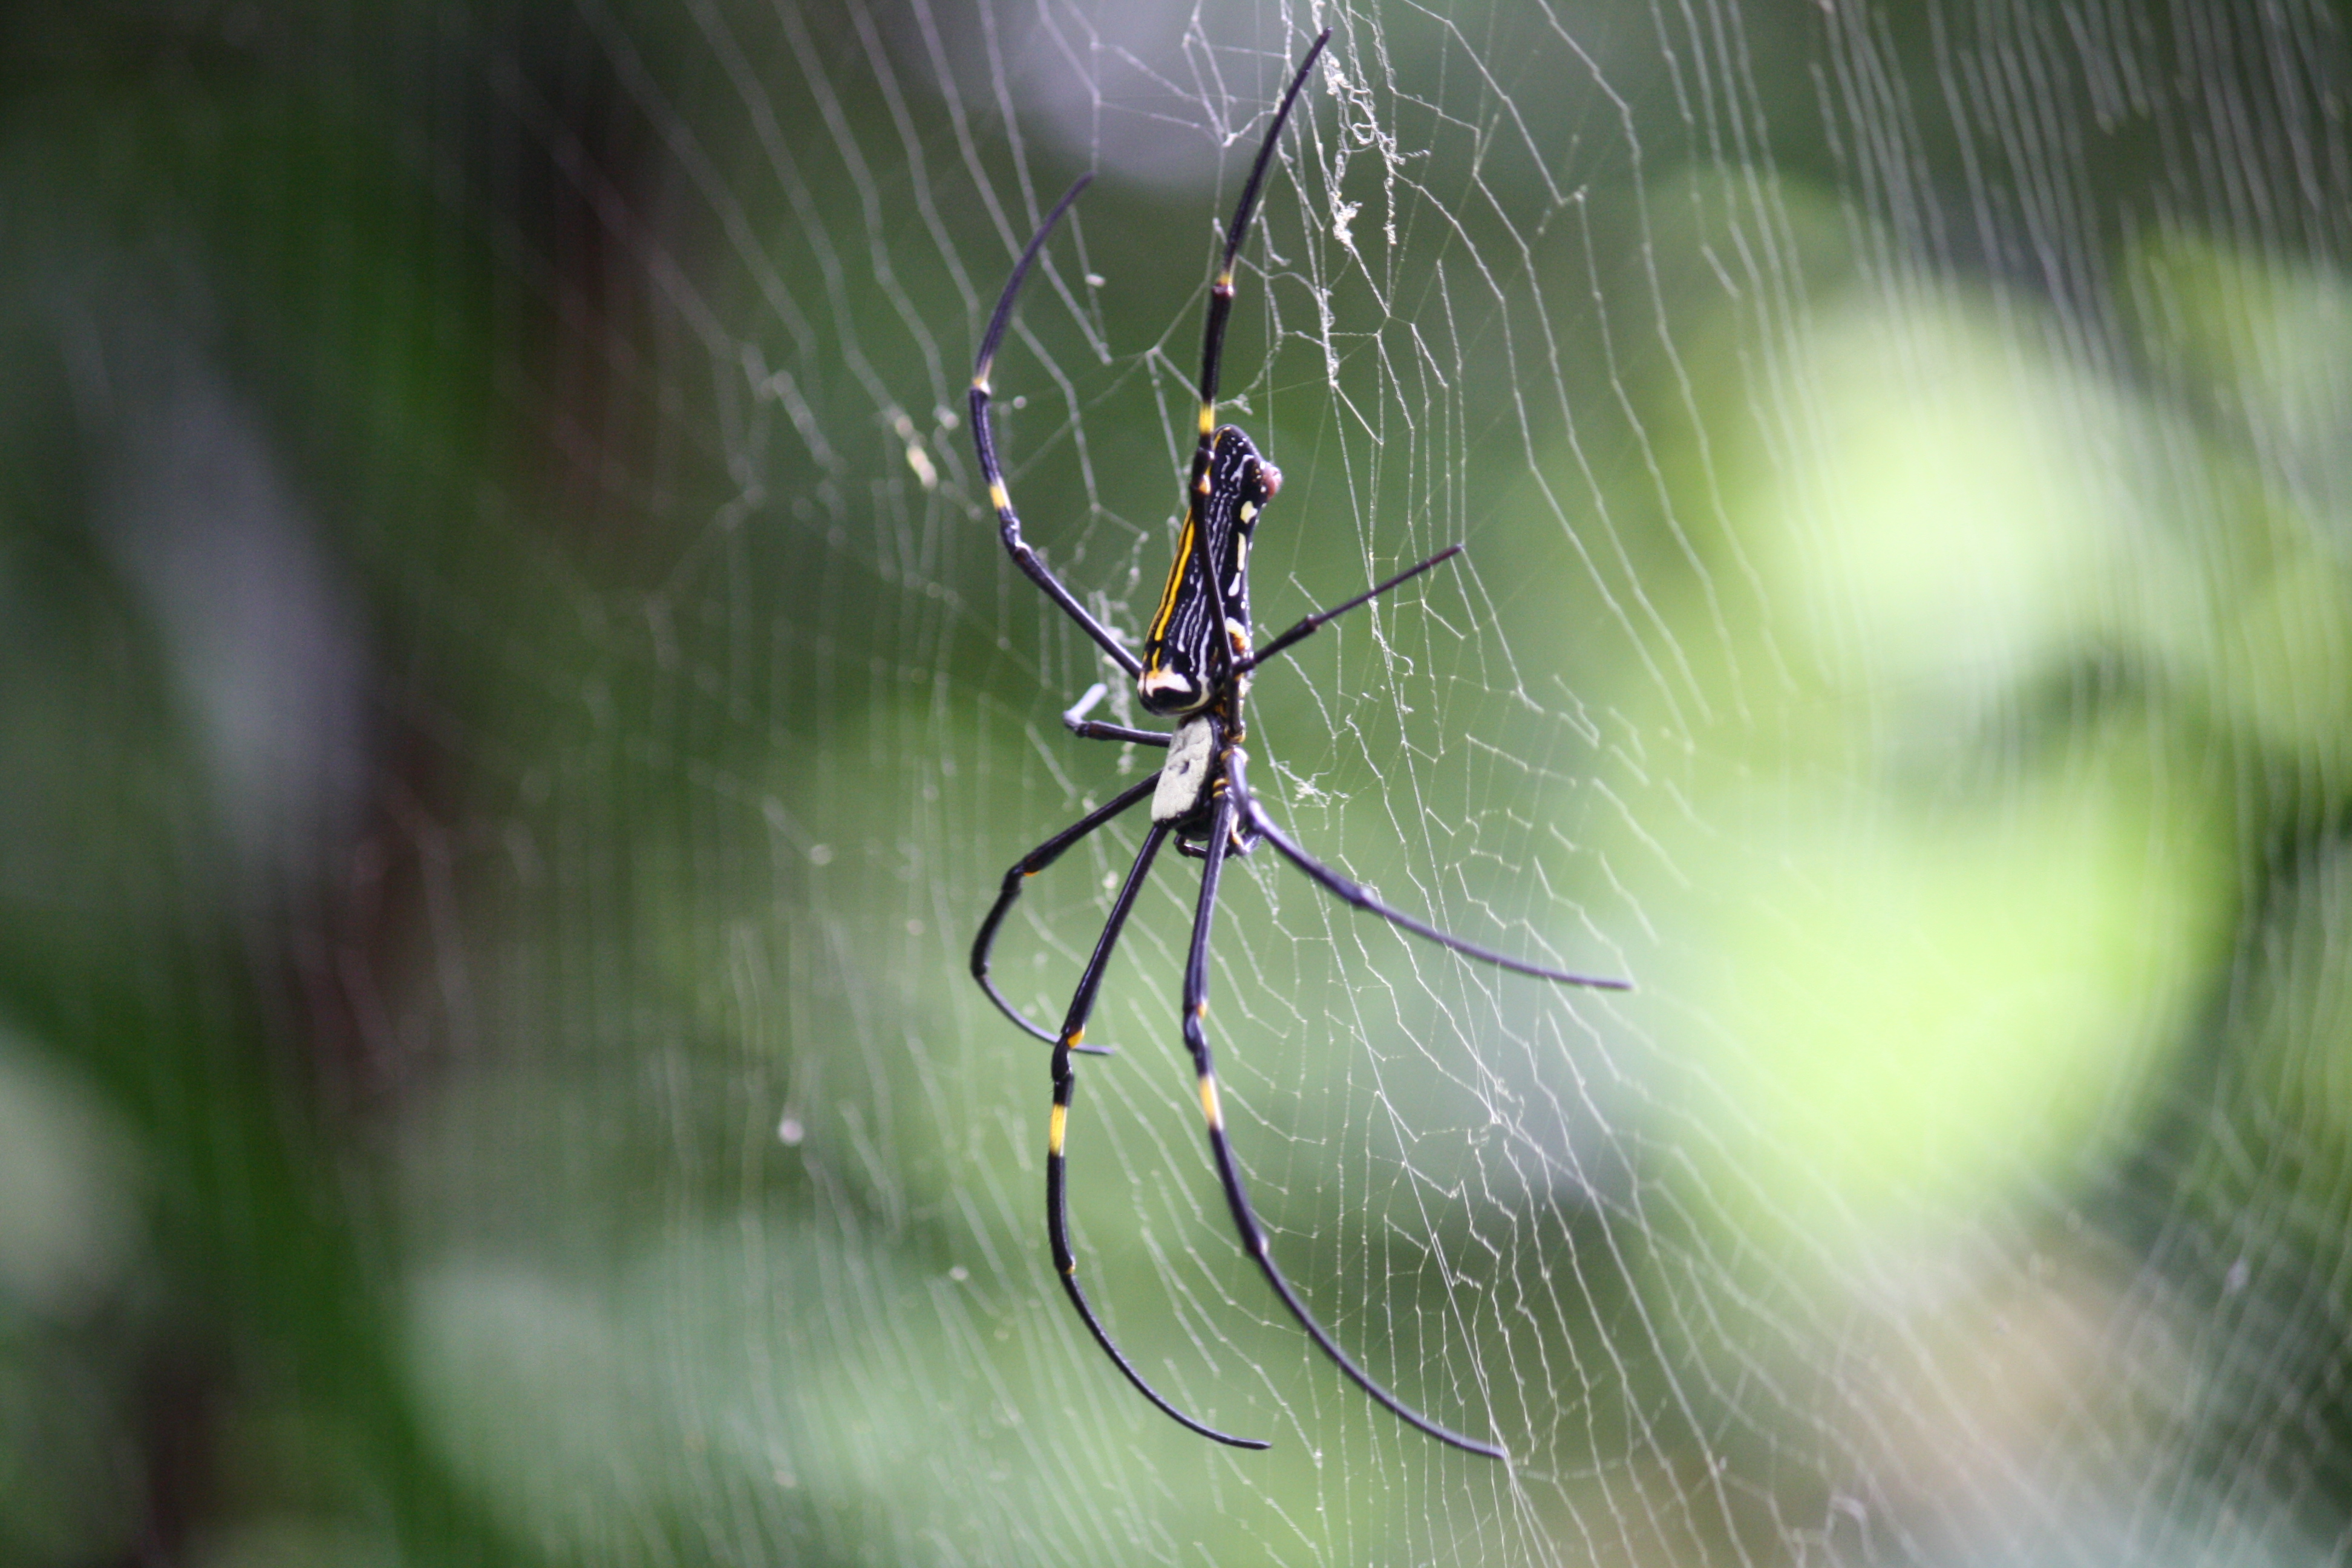 Beautiful spider photo